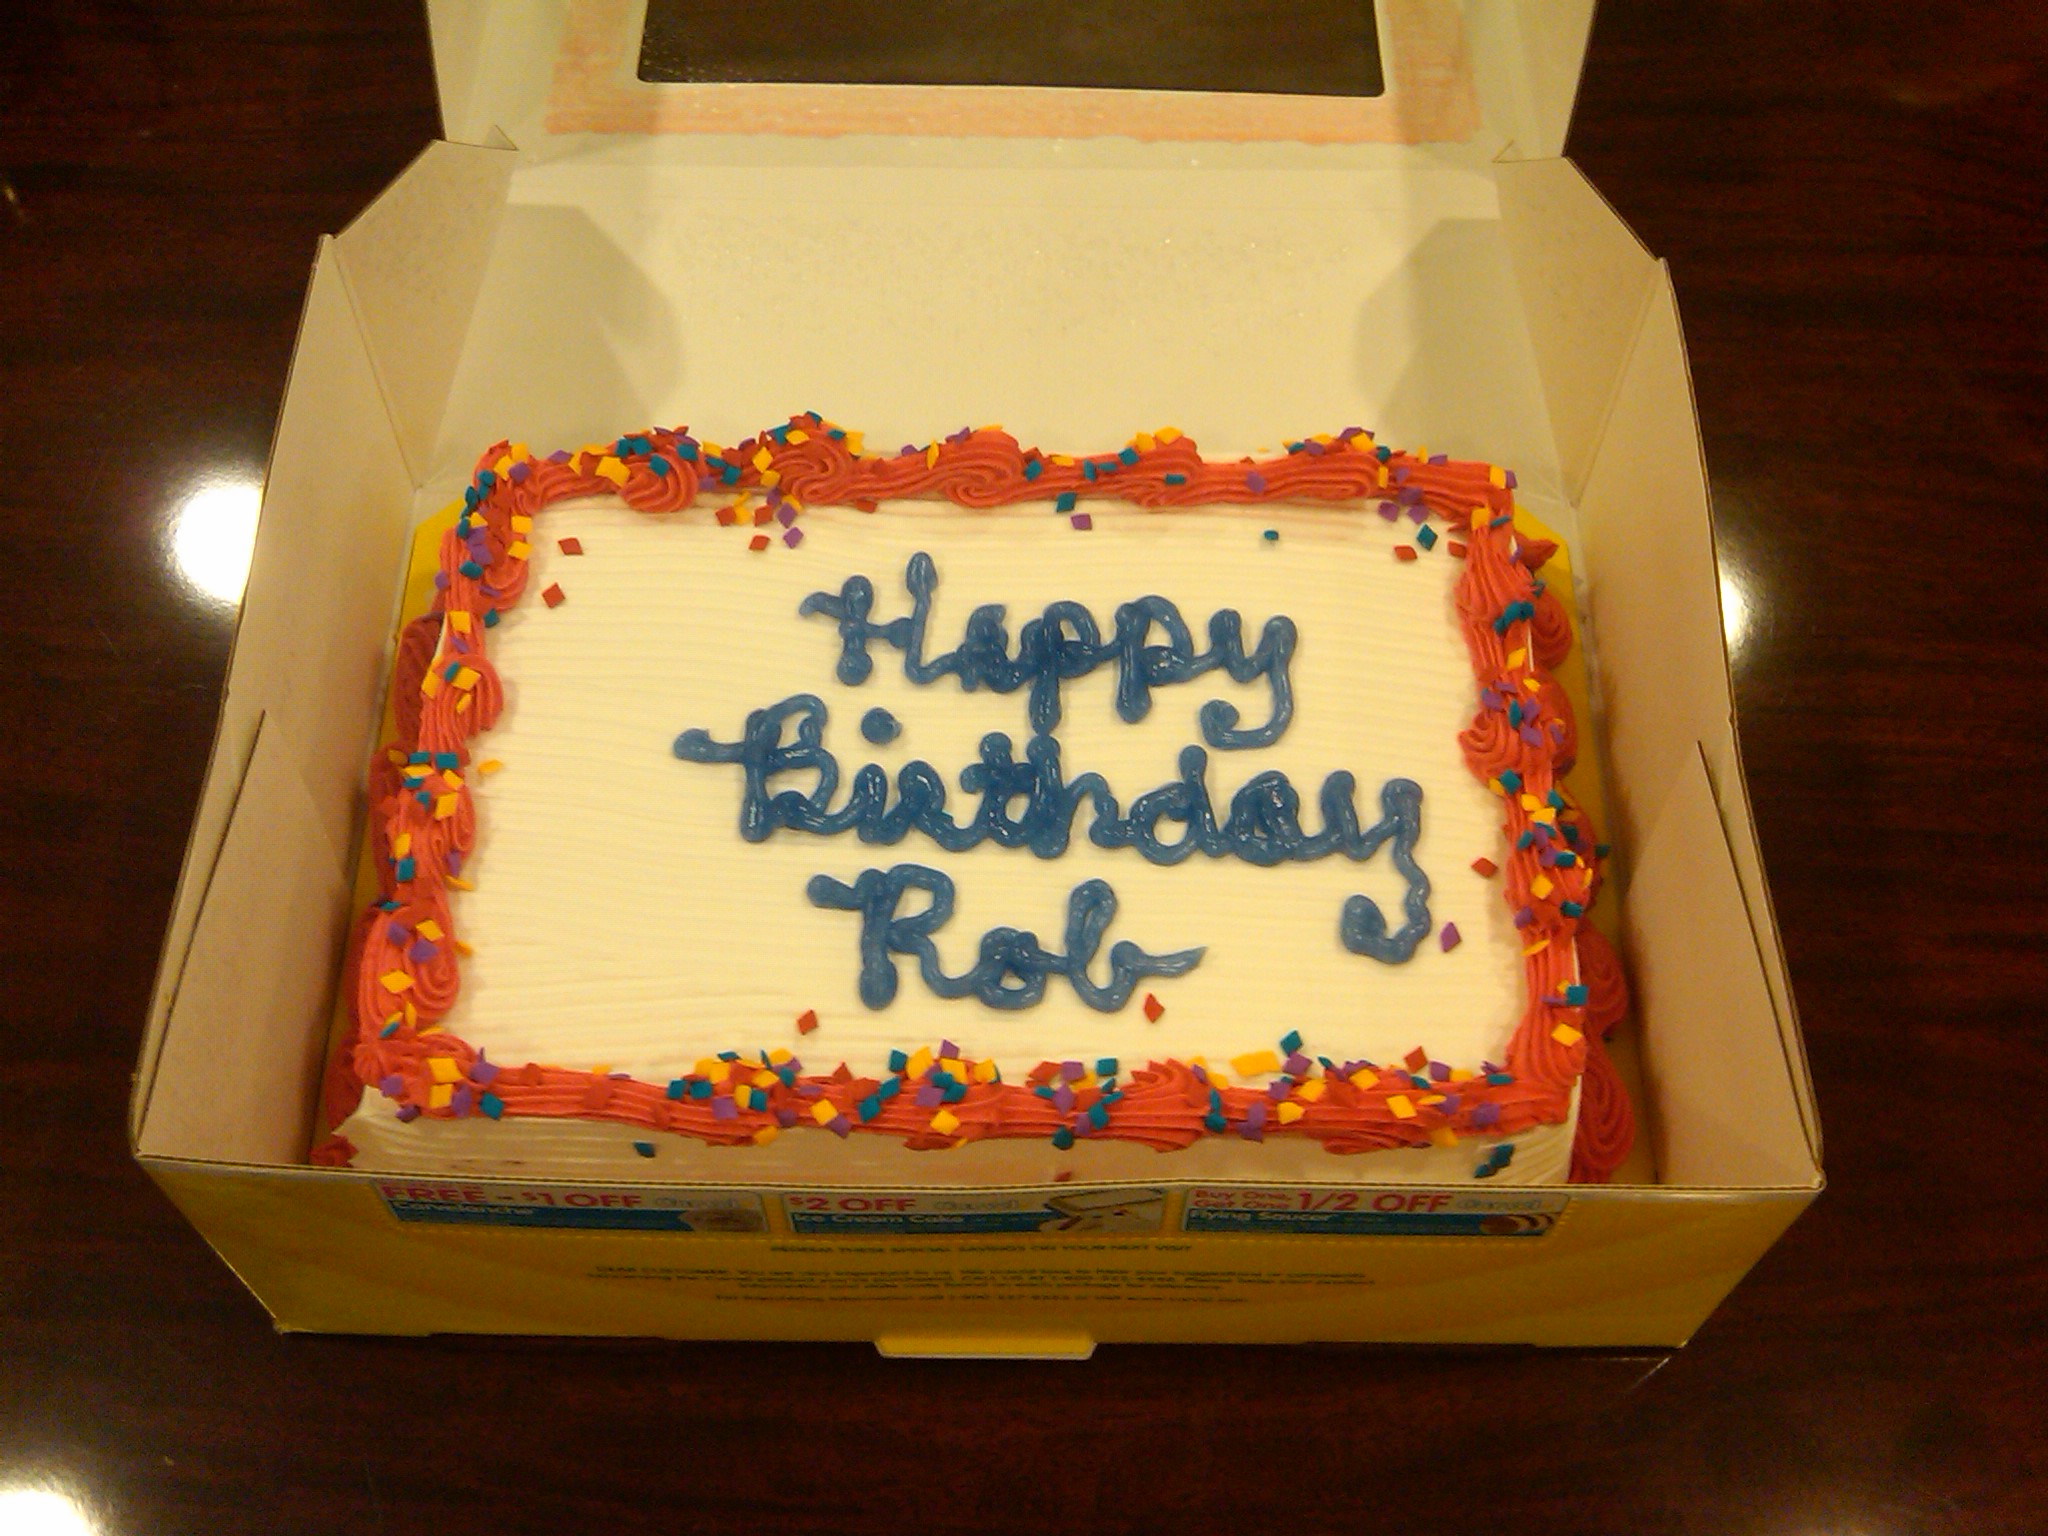 Happy birthday....rob! 